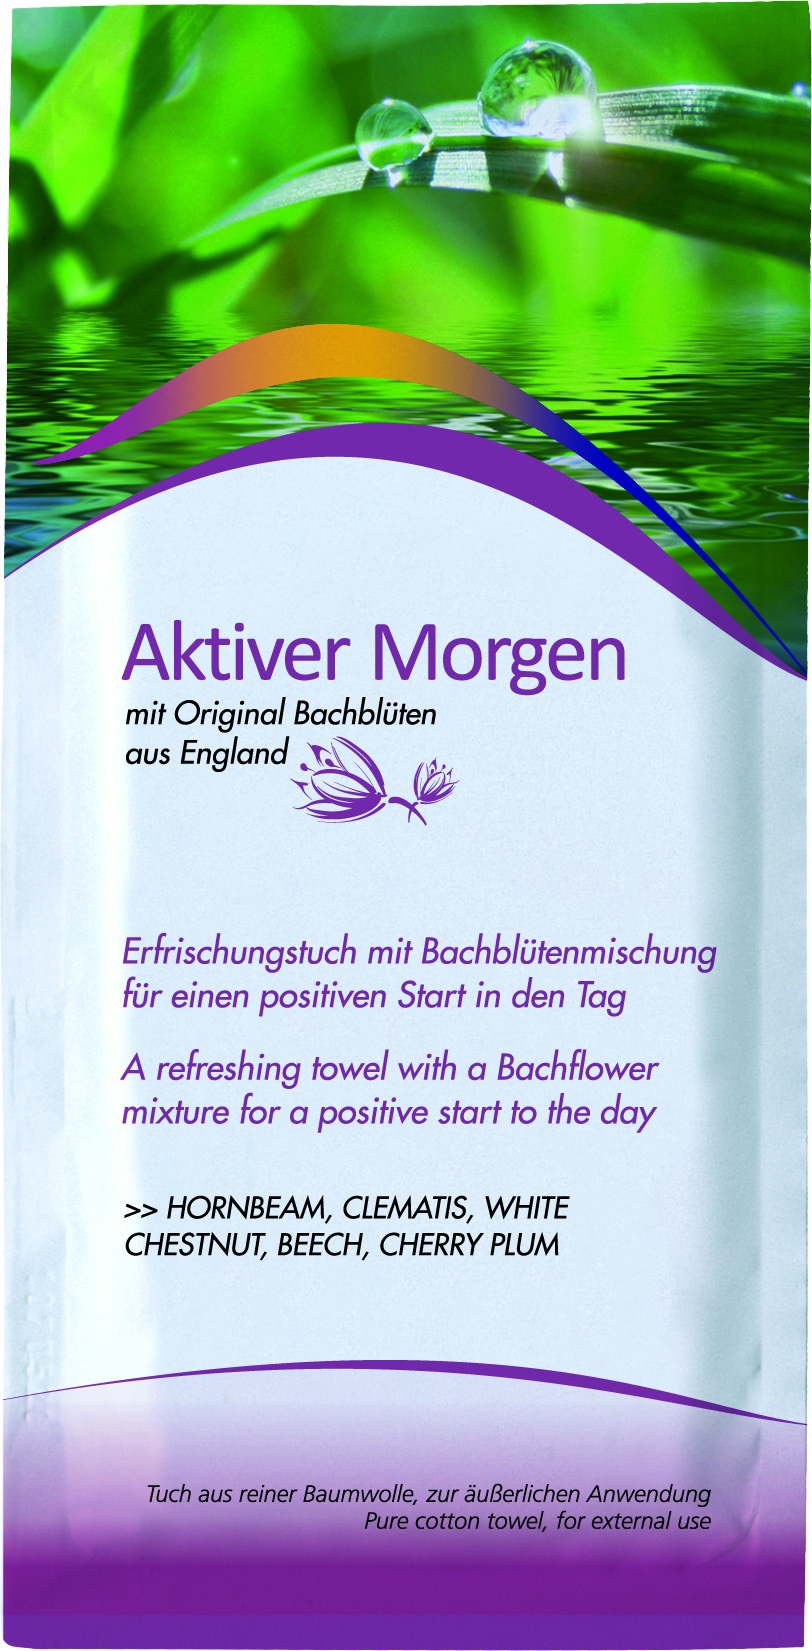 COOLIKE Bachblüten-Aromatuch "Aktiver Morgen"